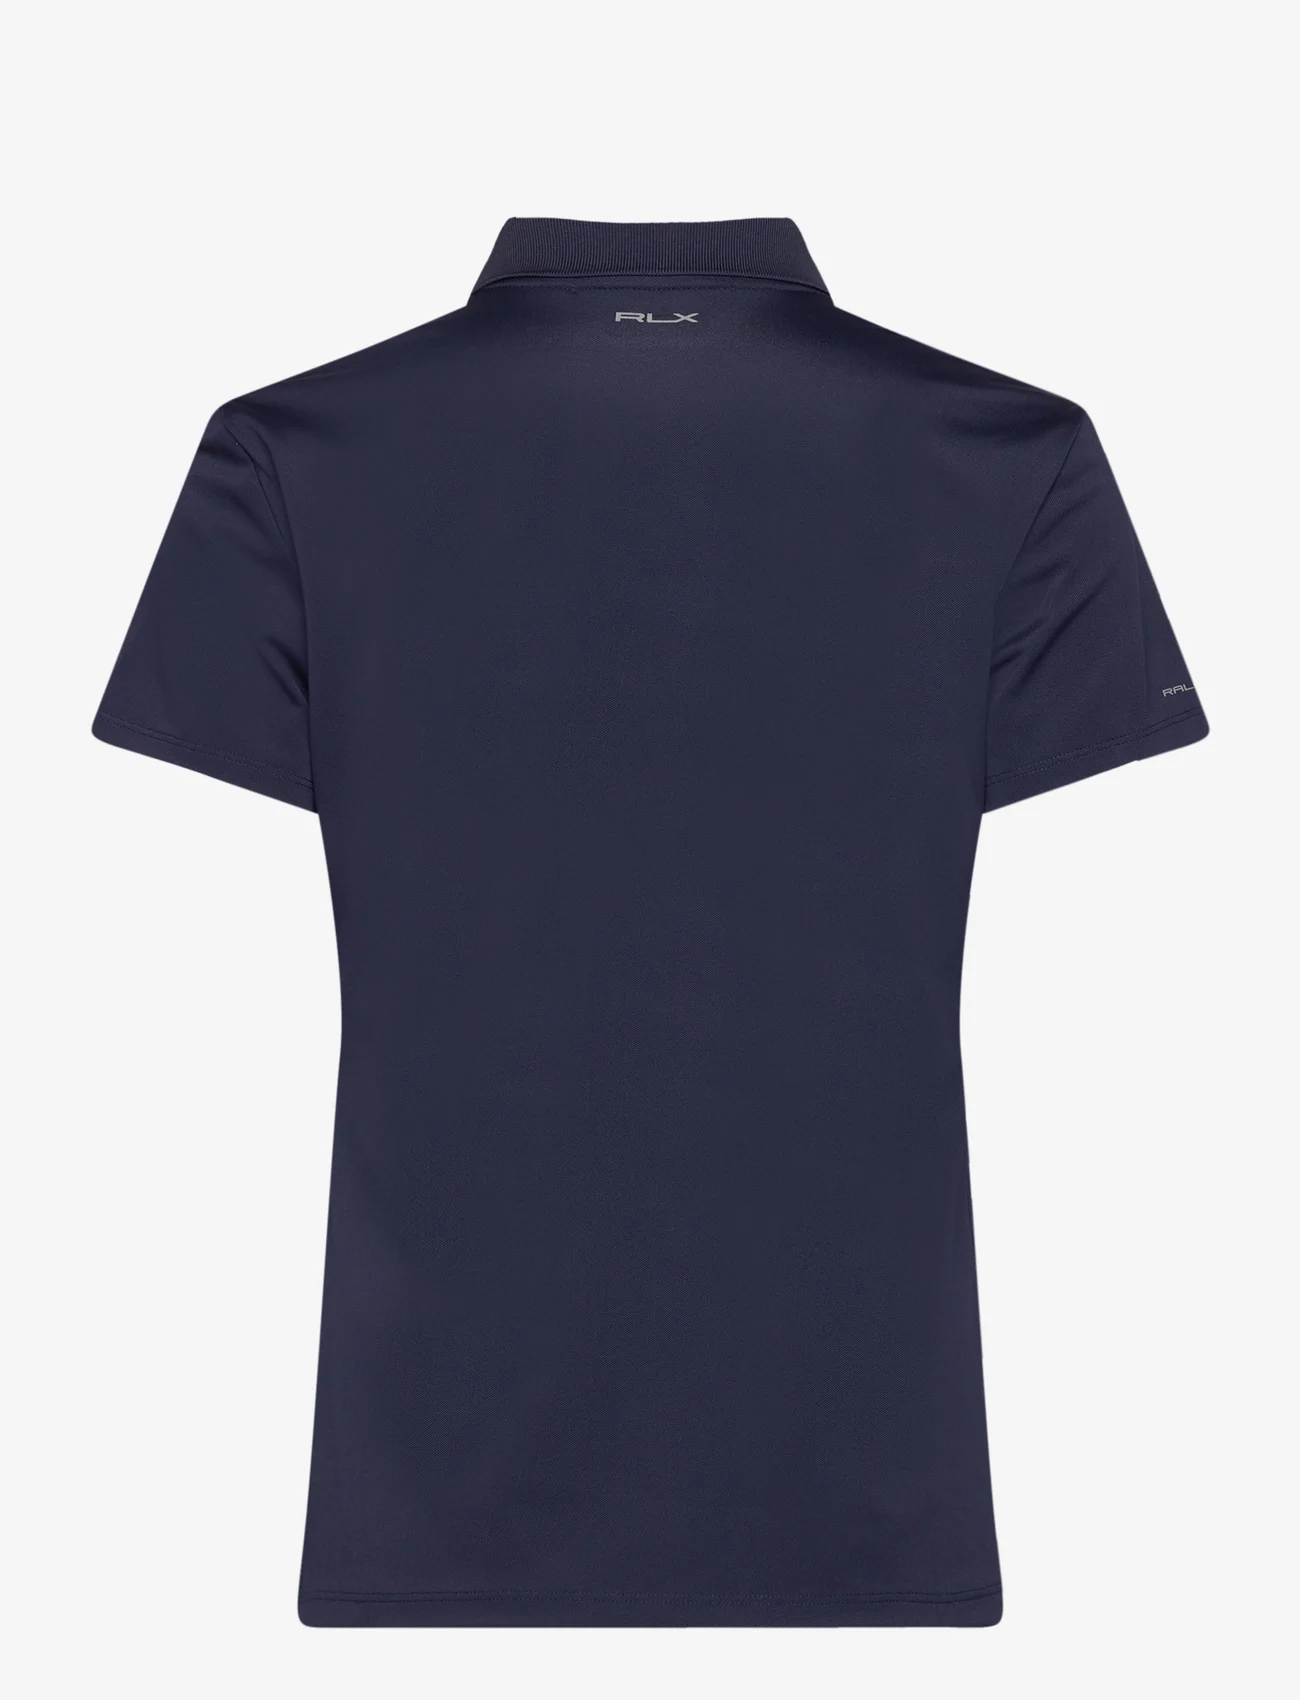 Ralph Lauren Golf - Classic Fit Tour Polo Shirt - polo krekli - refined navy - 1